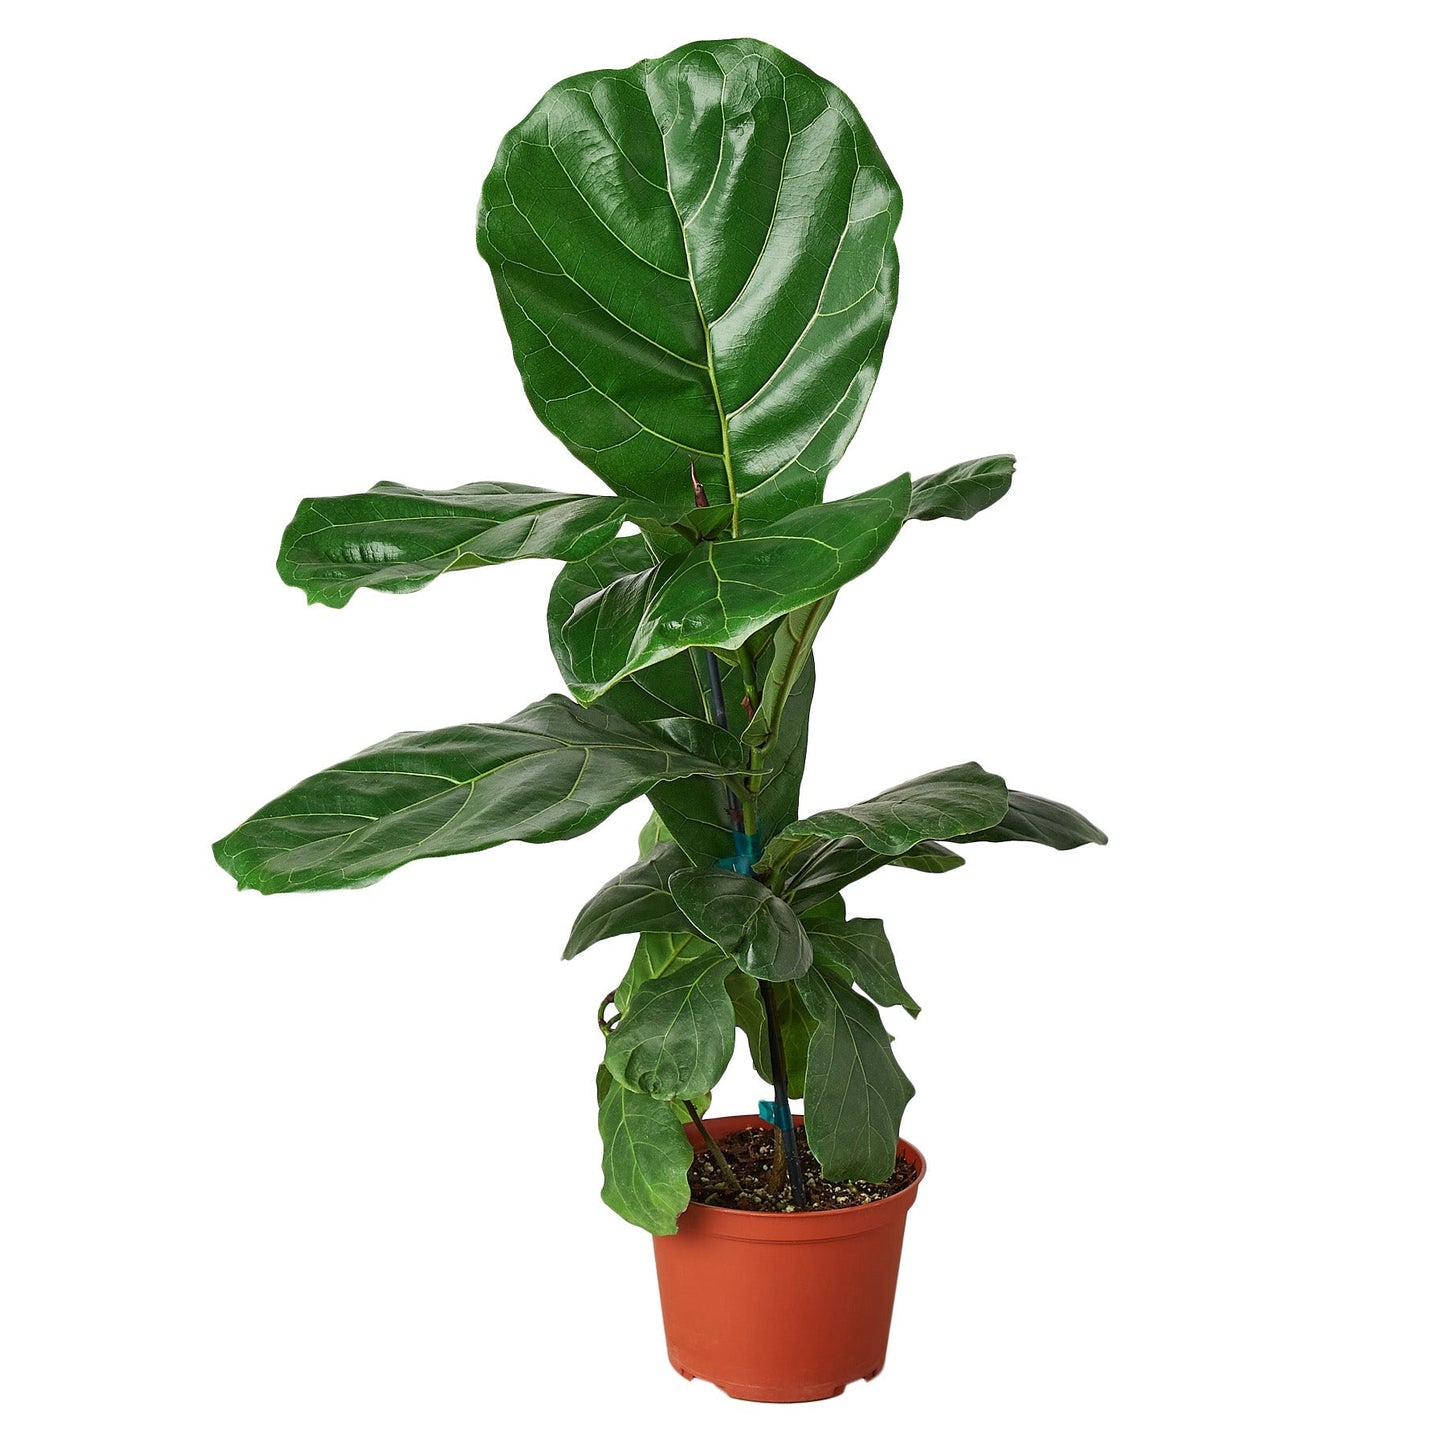 Ficus Lyrata 'Fiddle Leaf Fig' - 6" Pot - NURSERY POT ONLY - One Beleaf Away Plant Studio